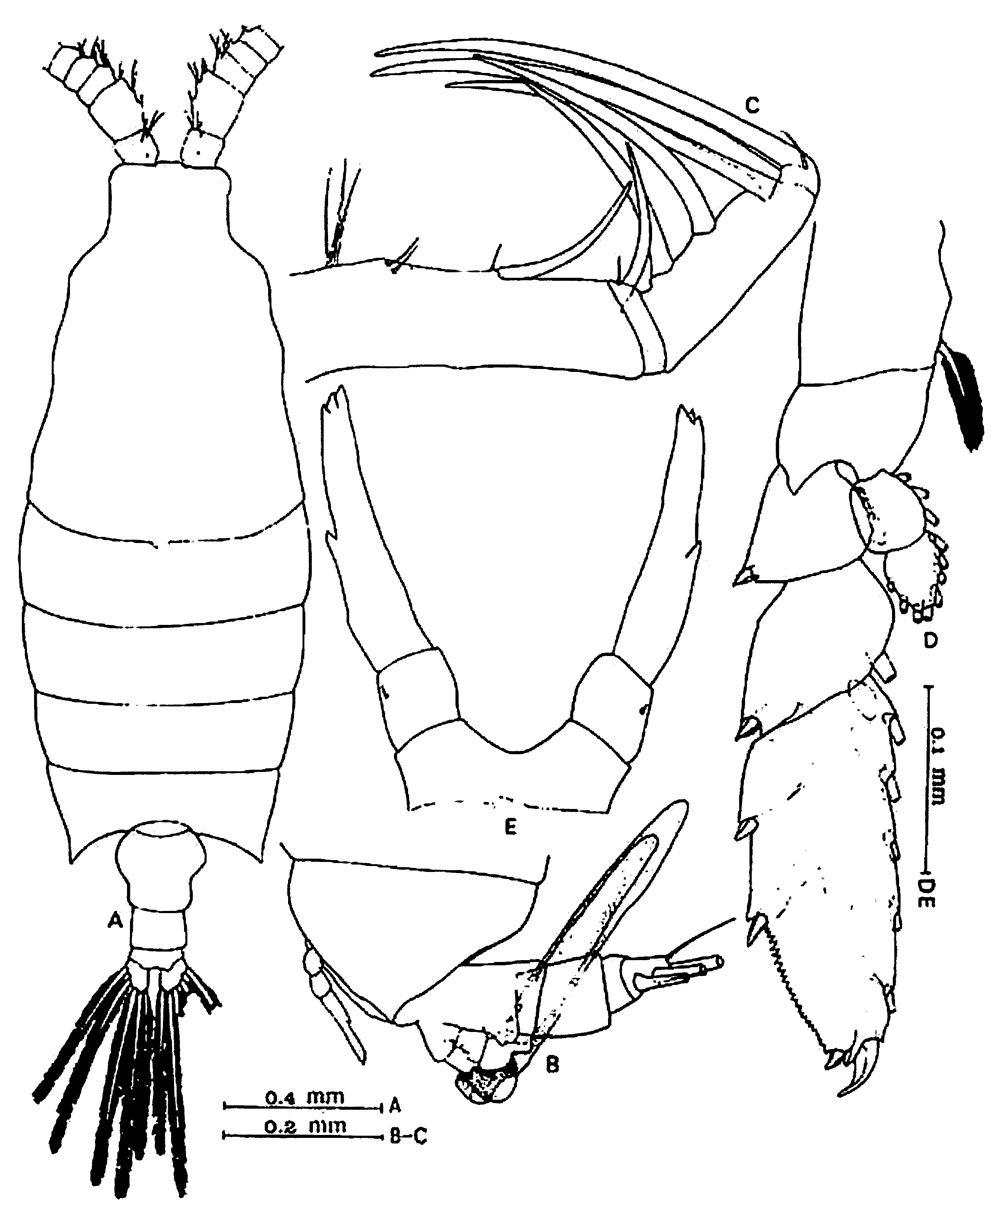 Species Candacia longimana - Plate 10 of morphological figures